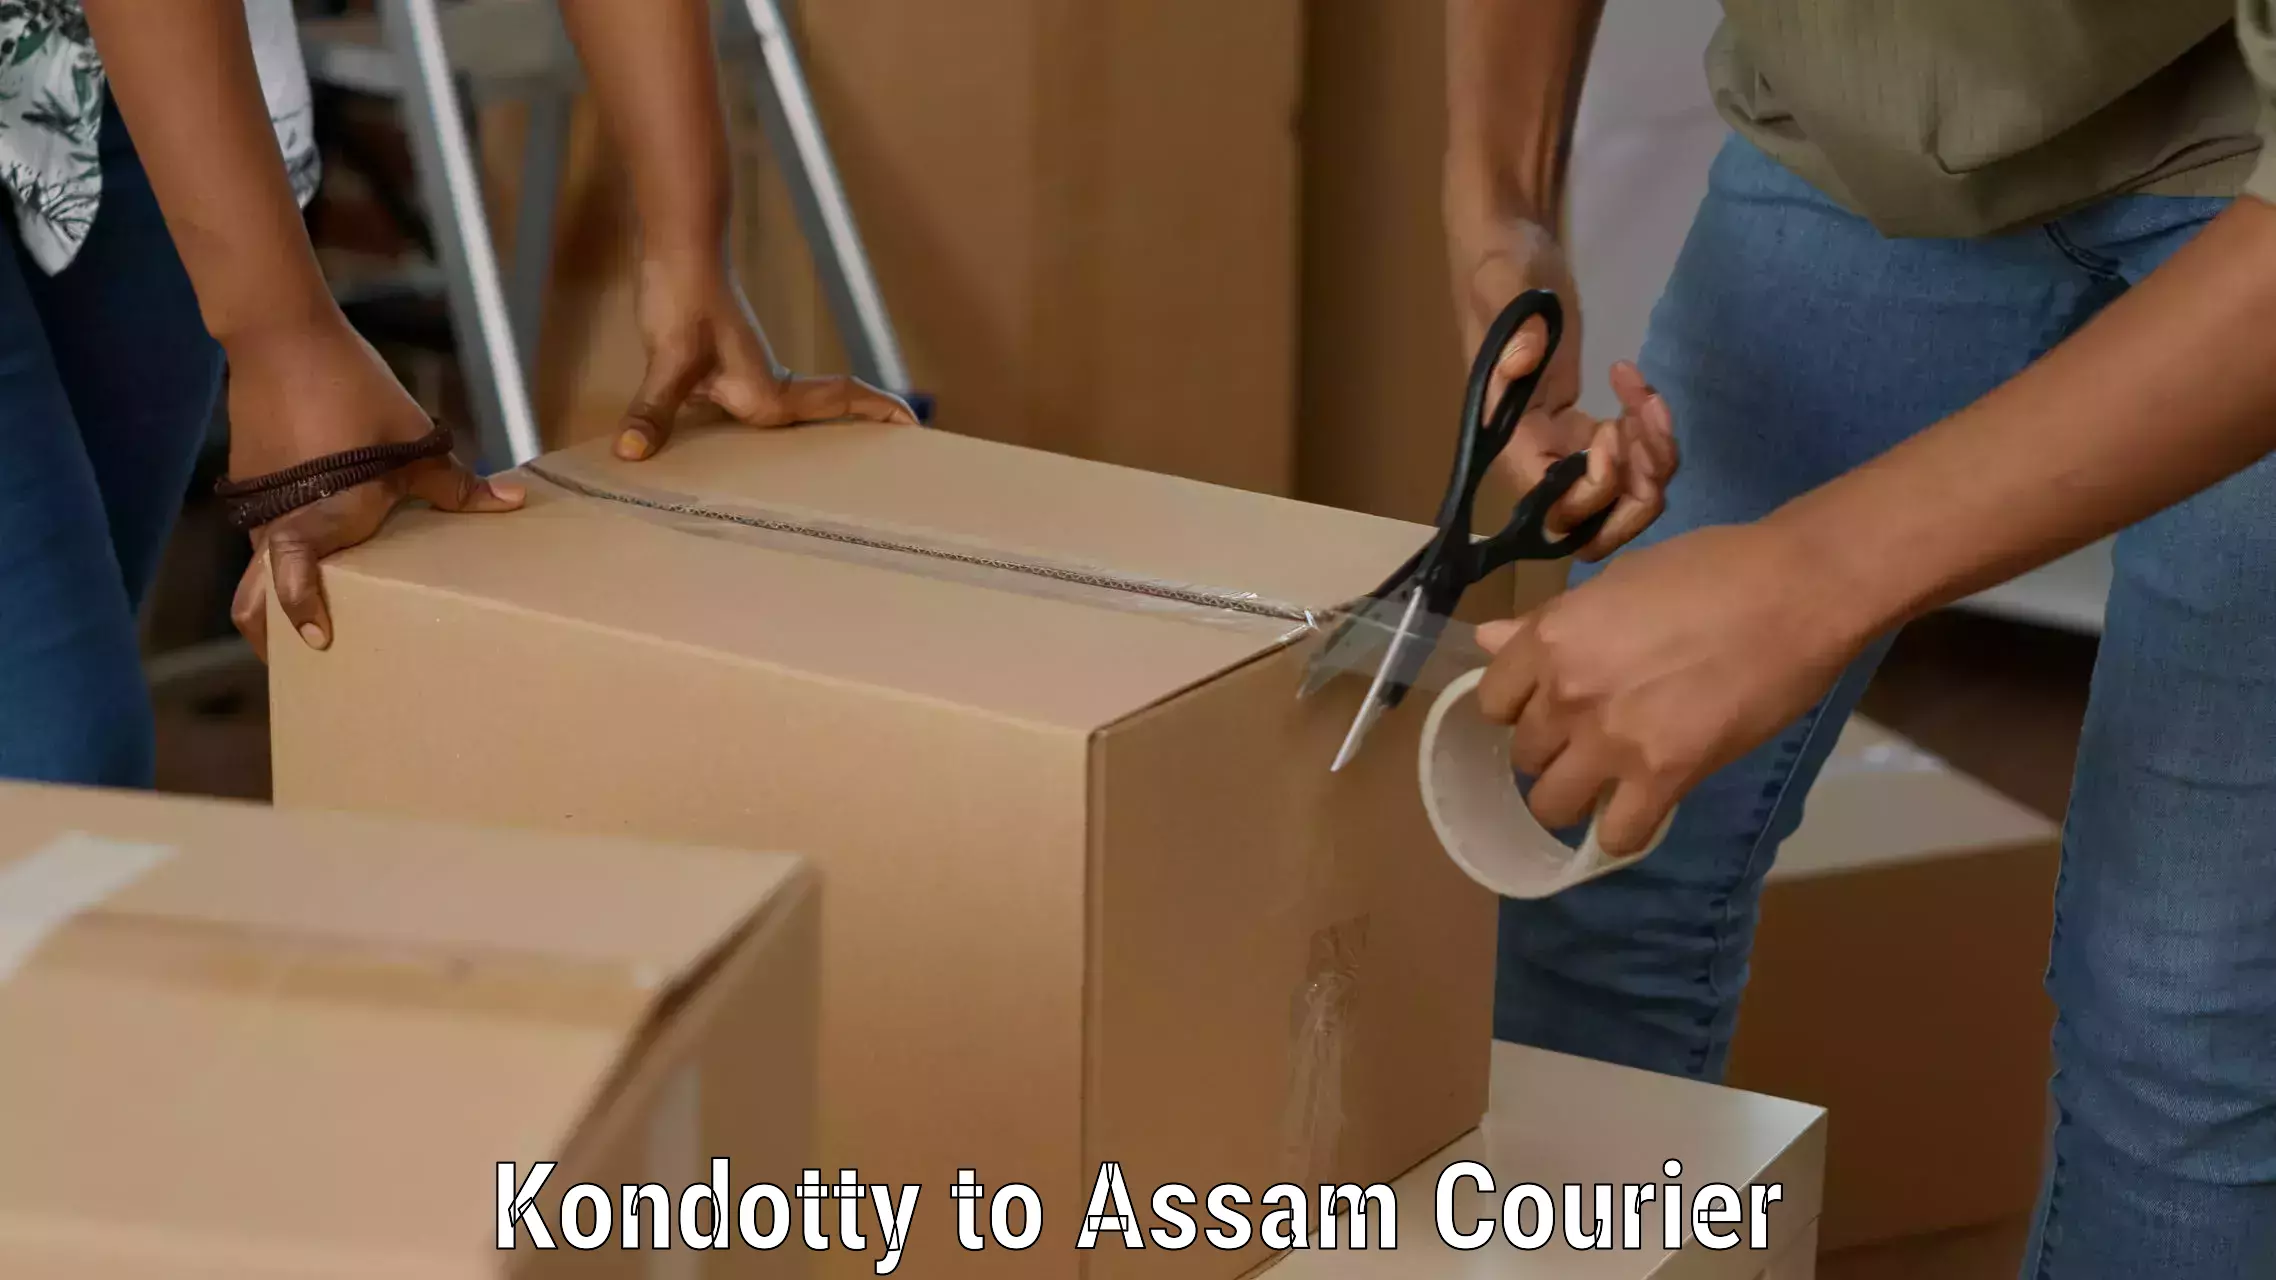 Global logistics network Kondotty to Assam